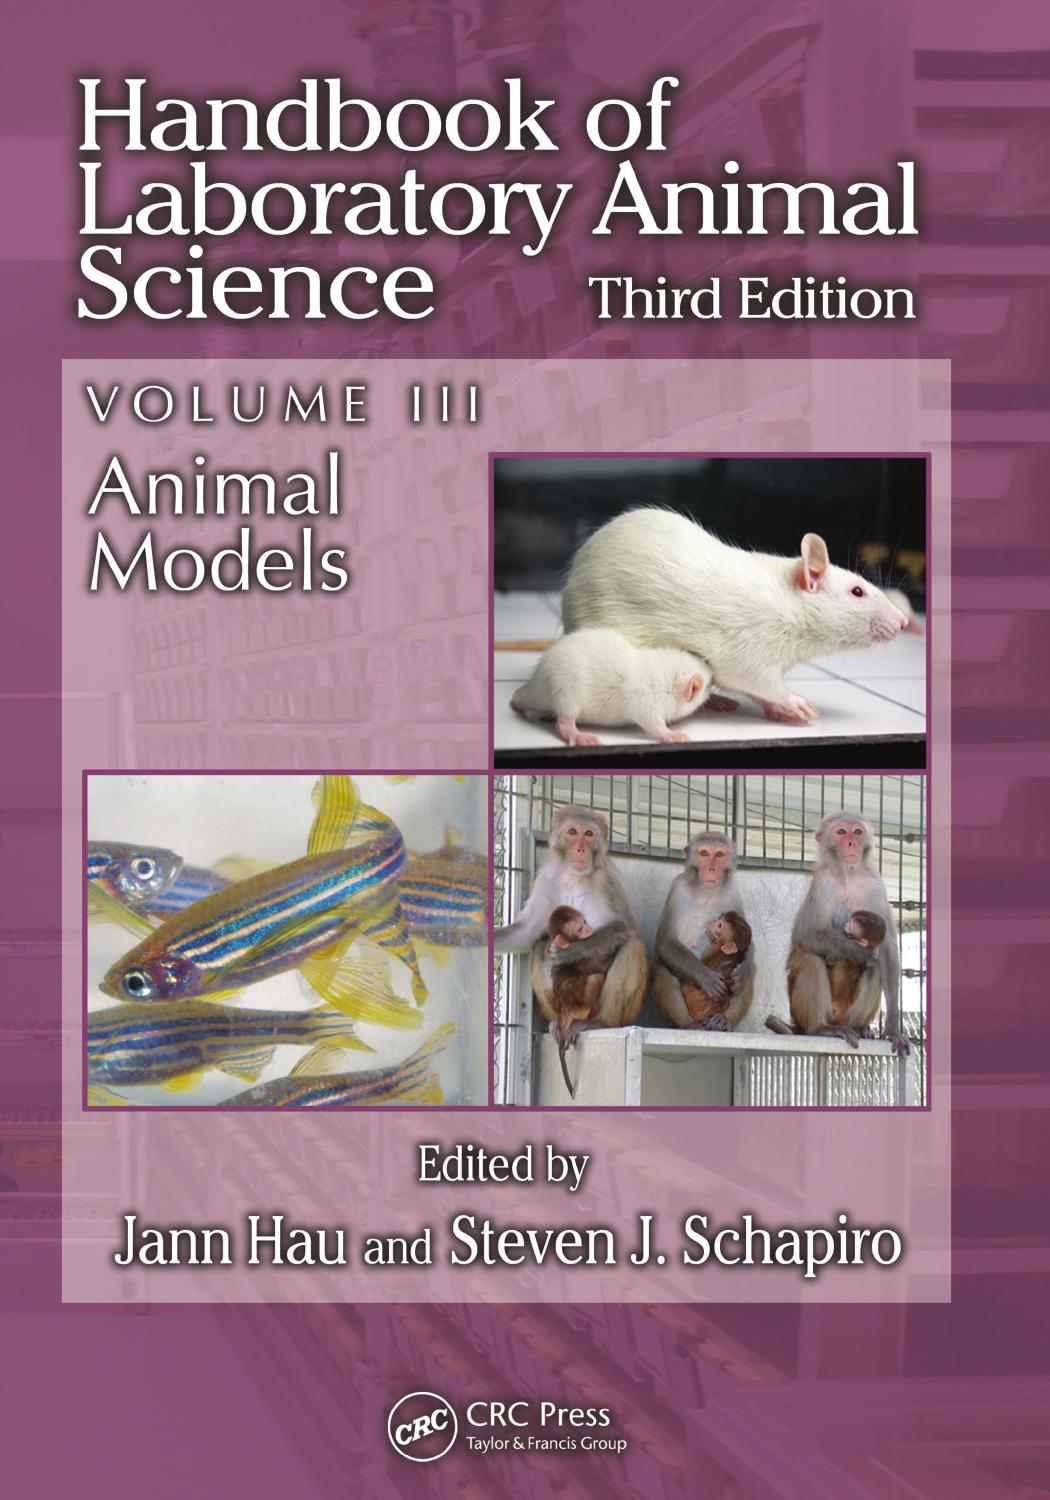 Handbook of Laboratory Animal Science, Volume III, Third Edition: Animal Models